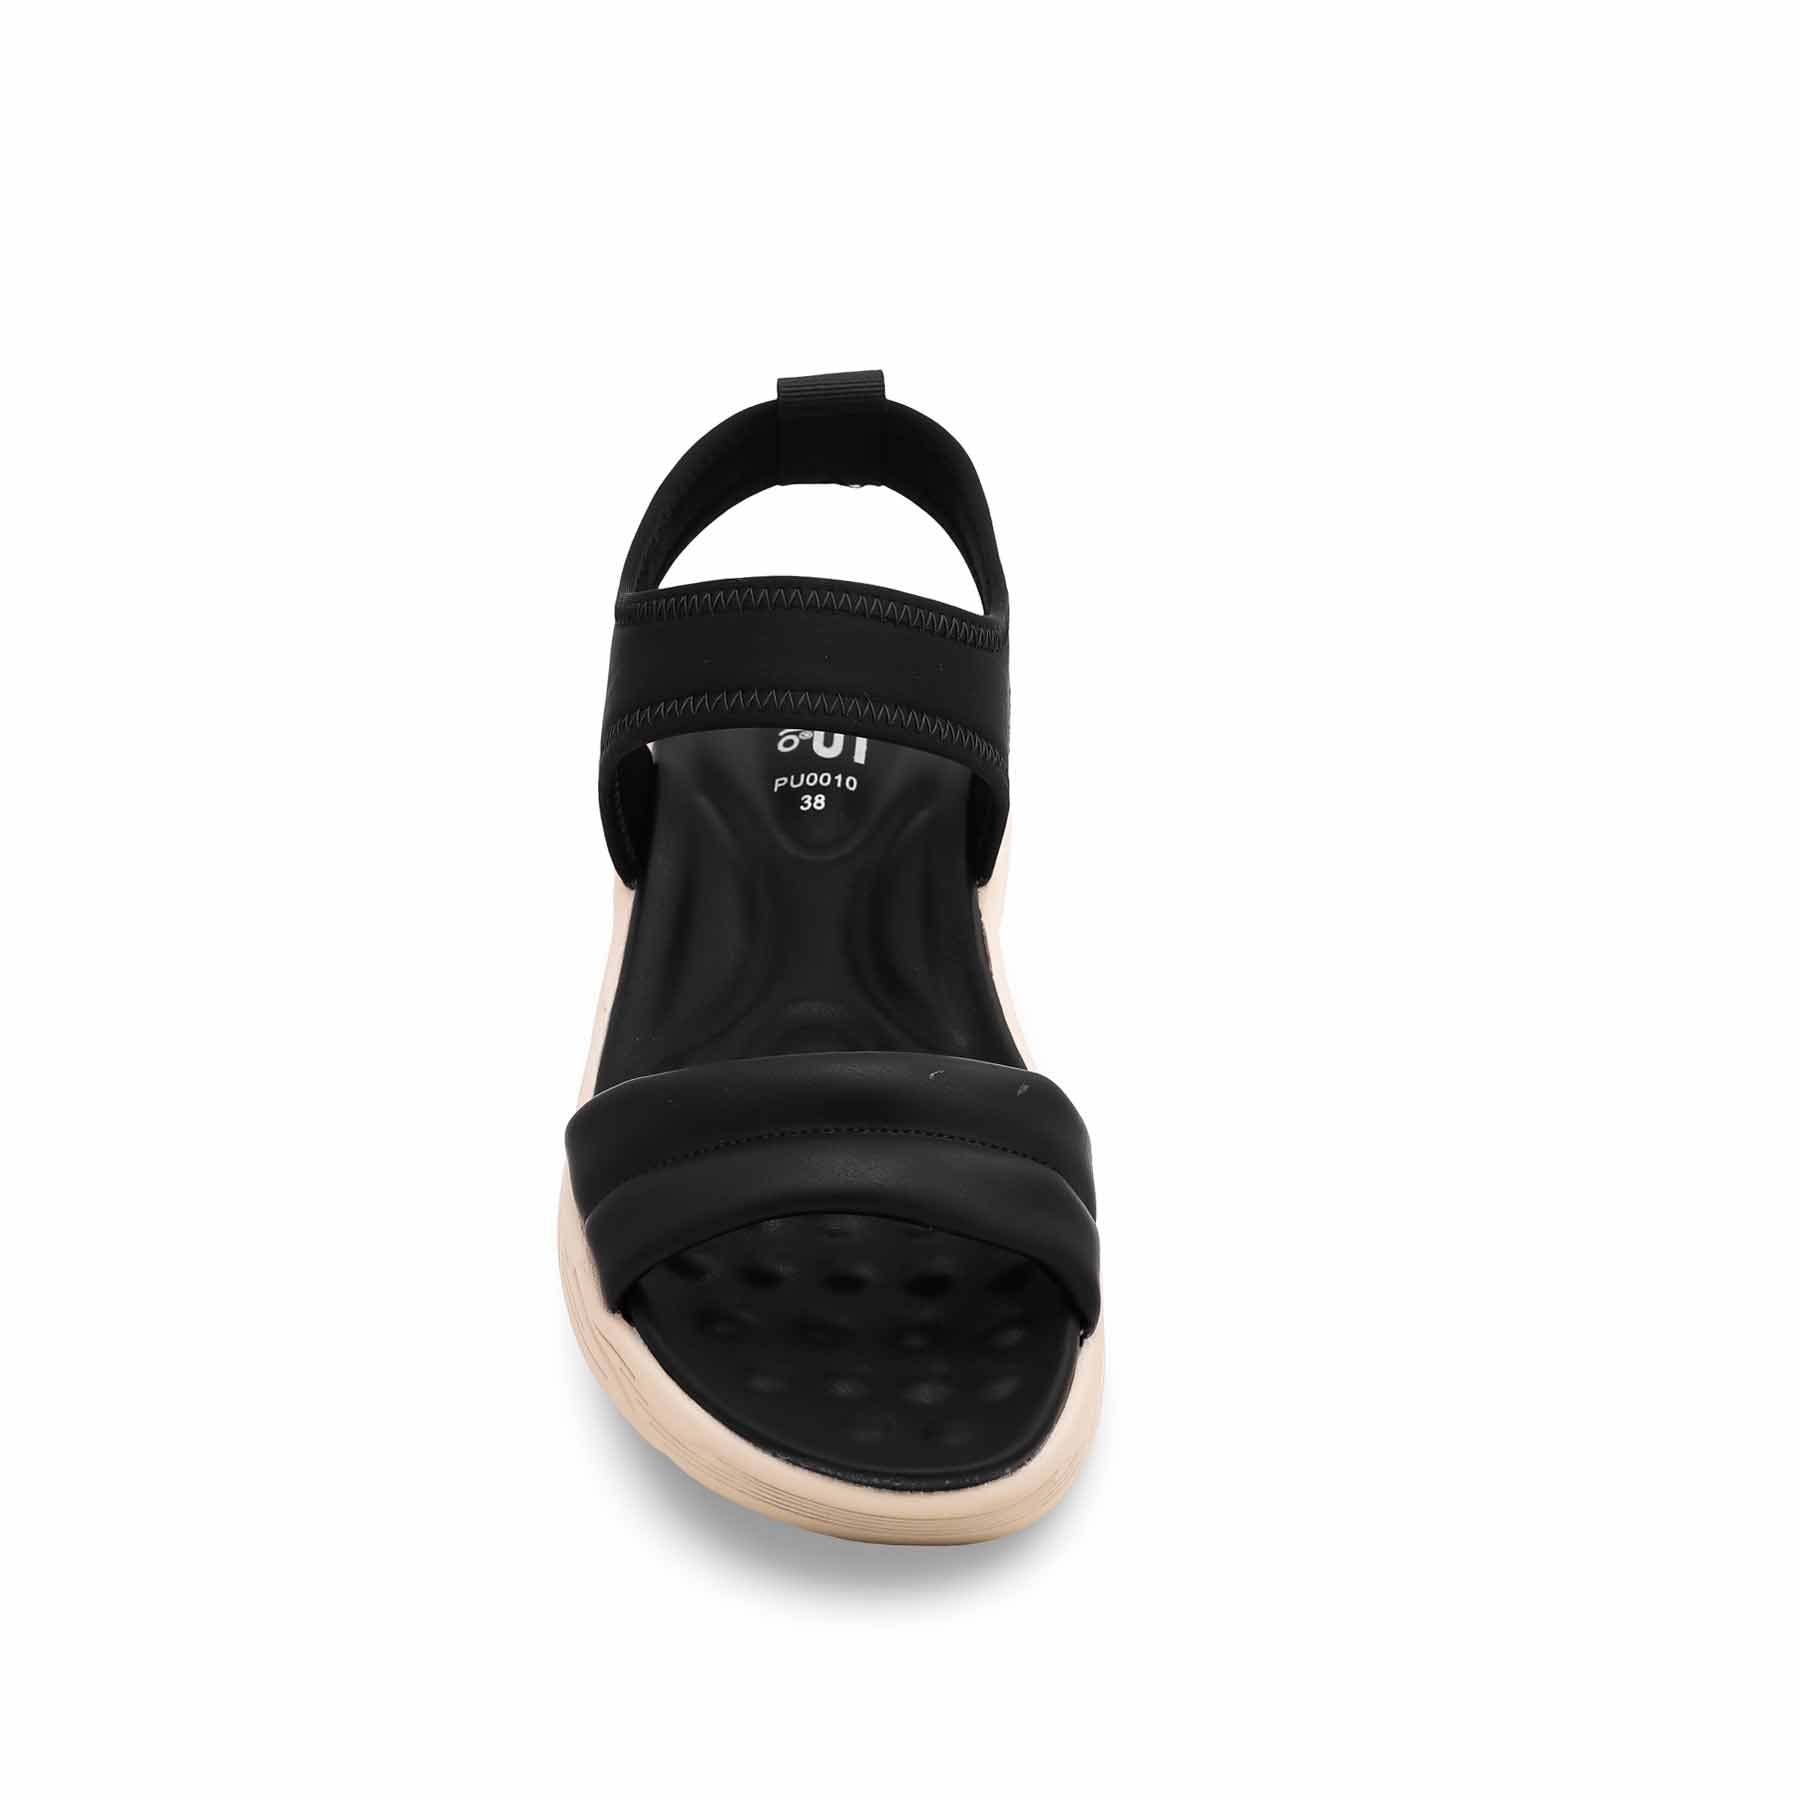 Black Formal Sandal PU0010